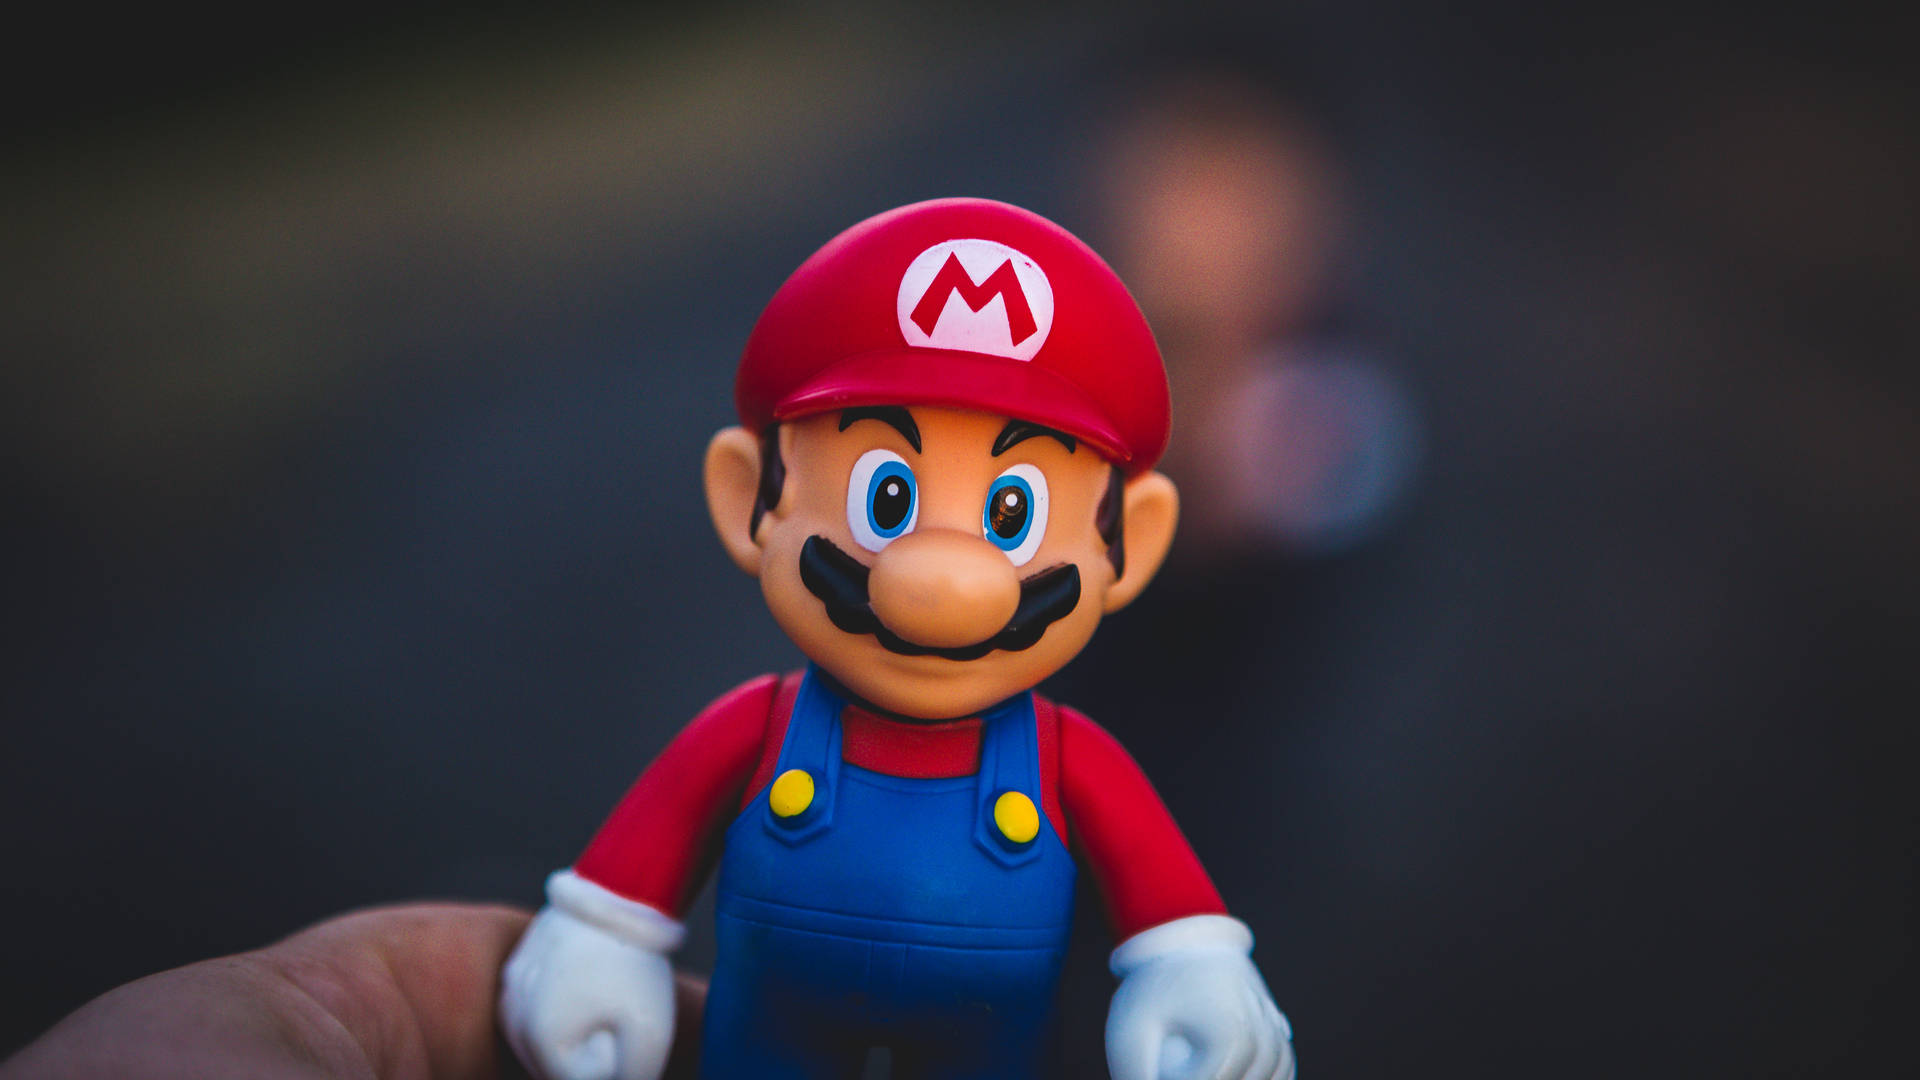 Gamer Super Mario Figurine Wallpaper